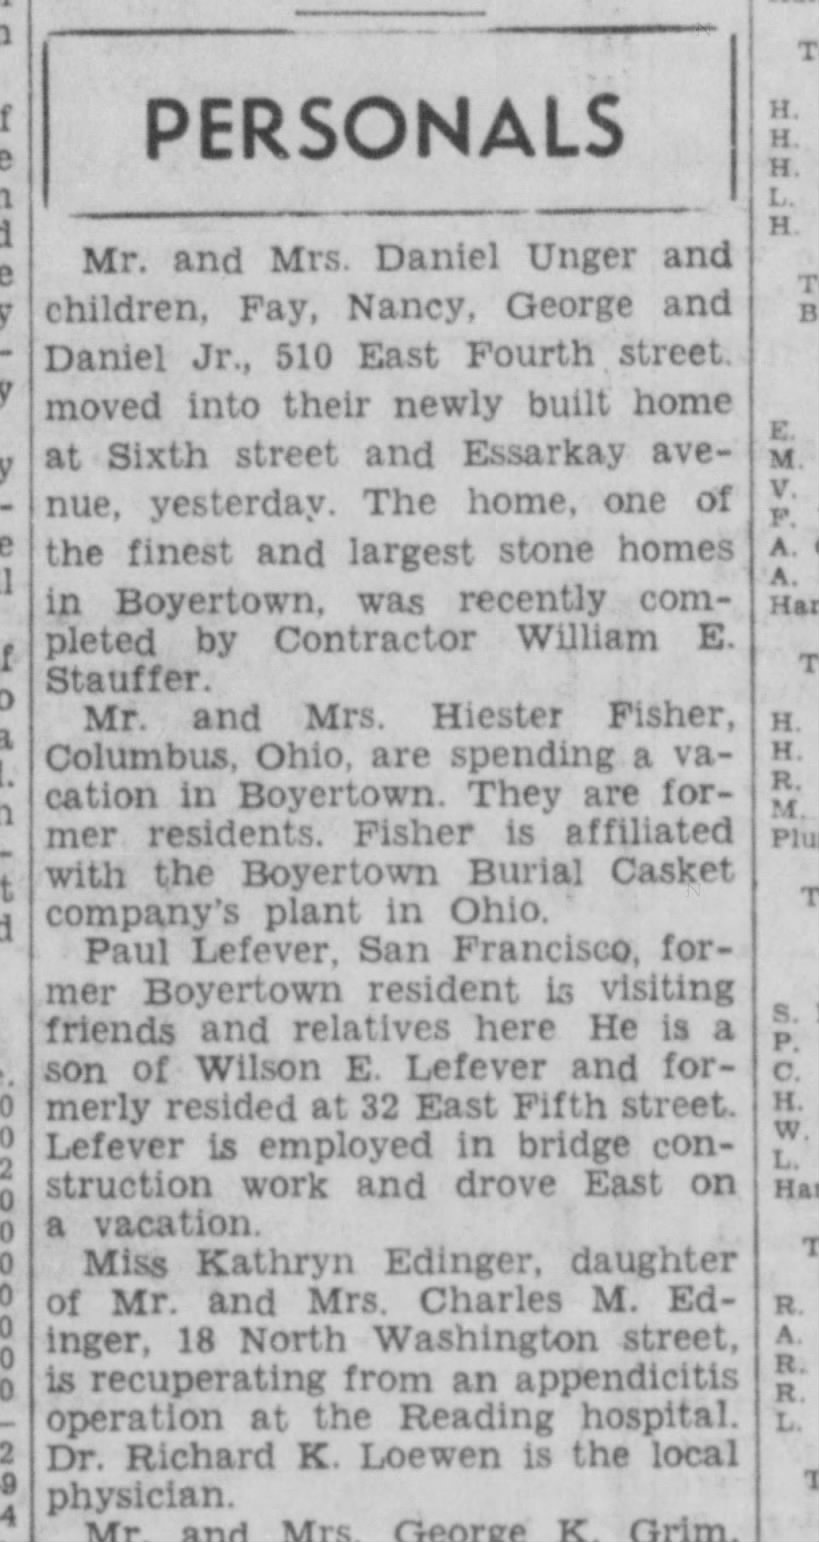 Pottstown Mercury, Pottstown, PA, 18 September 1936, page 12